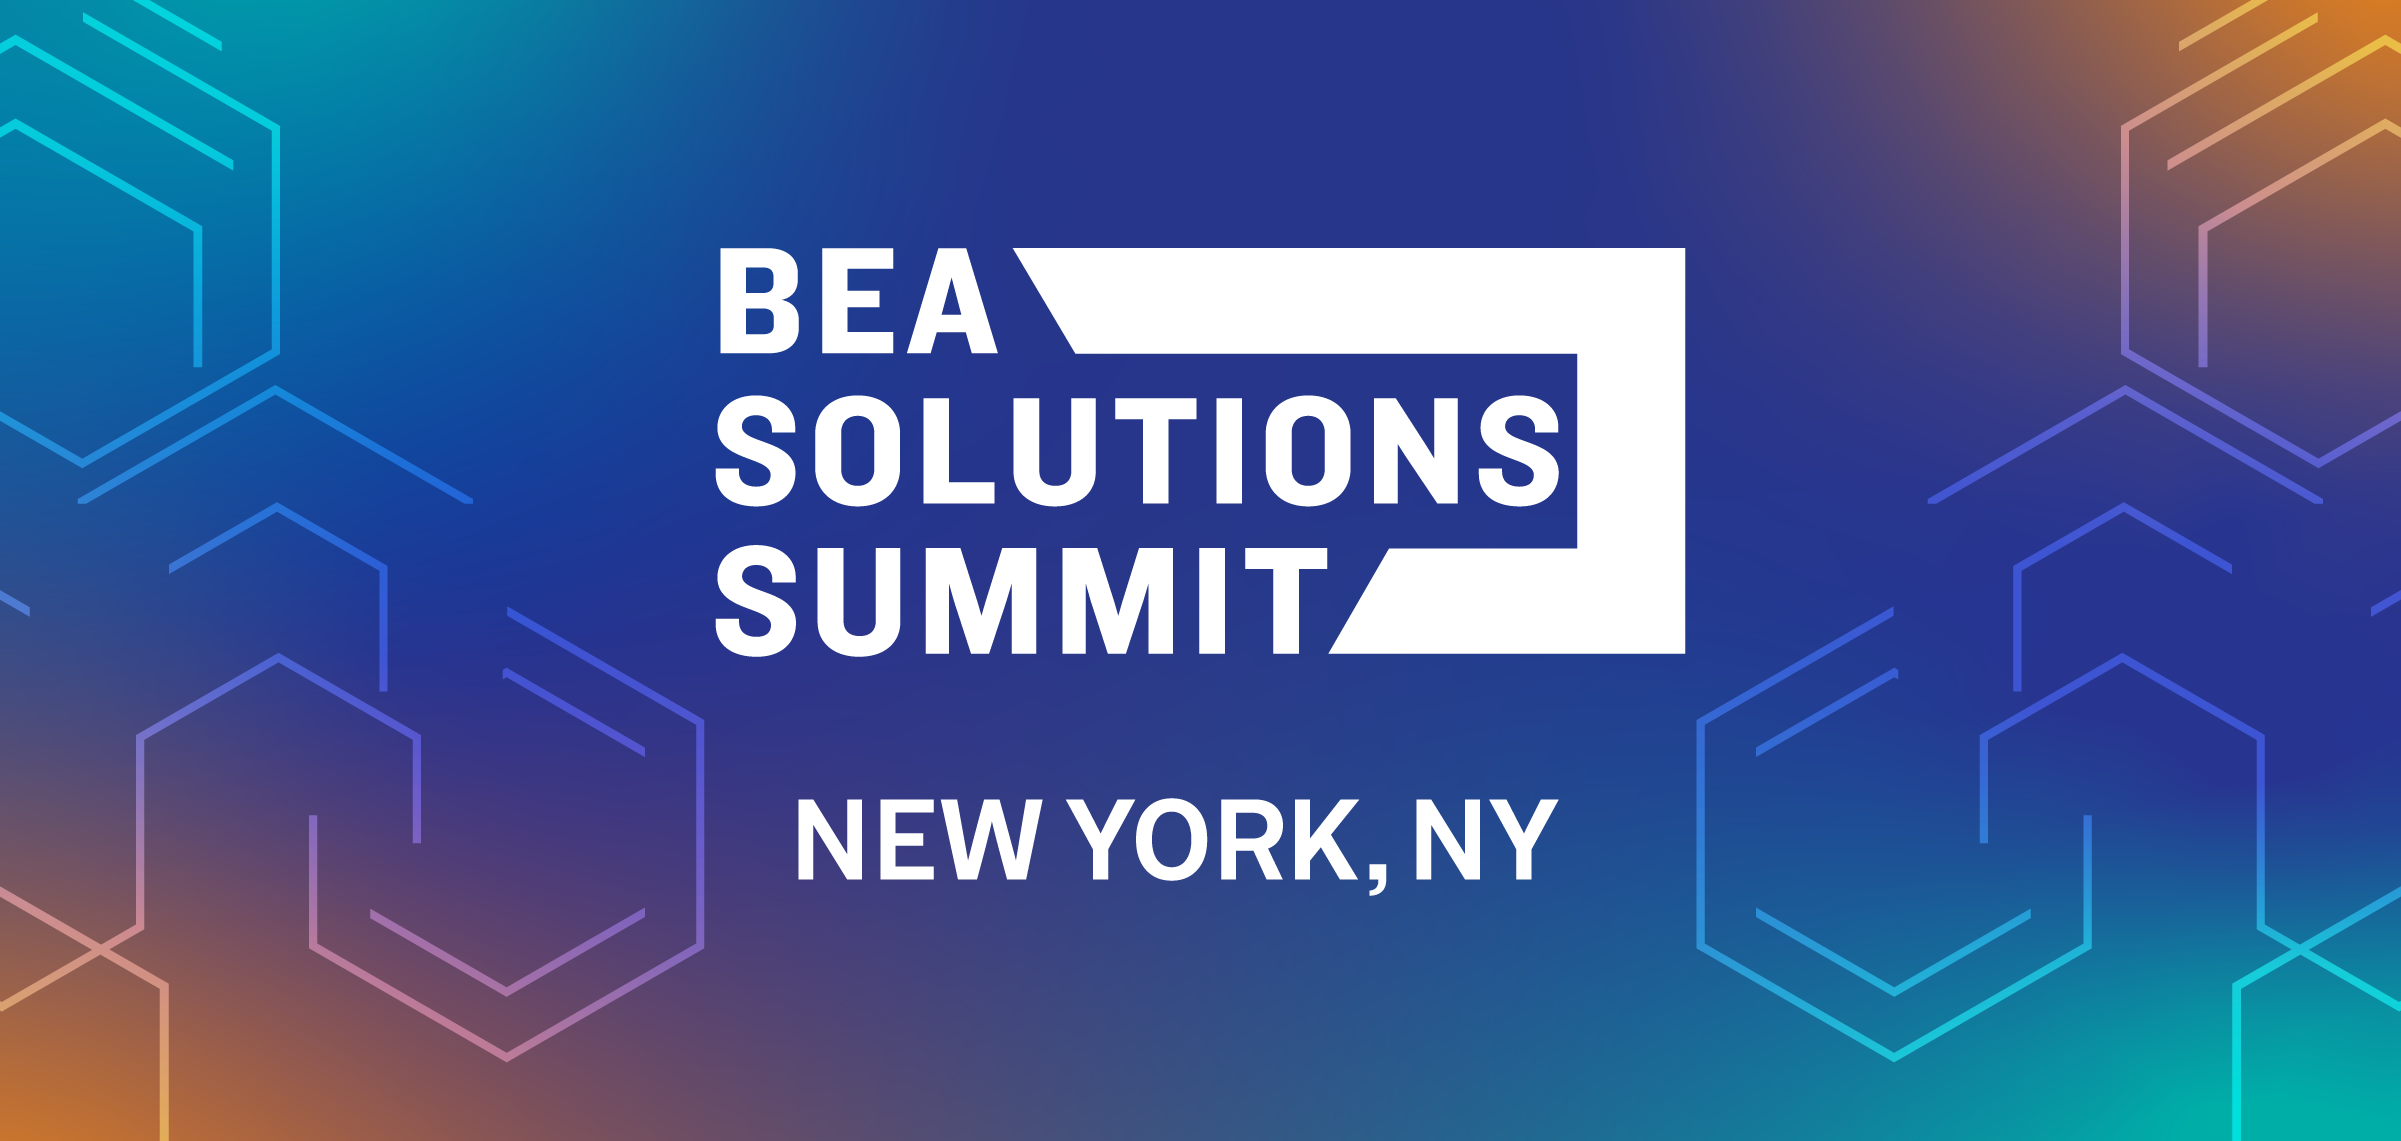 BEA Solutions Summit